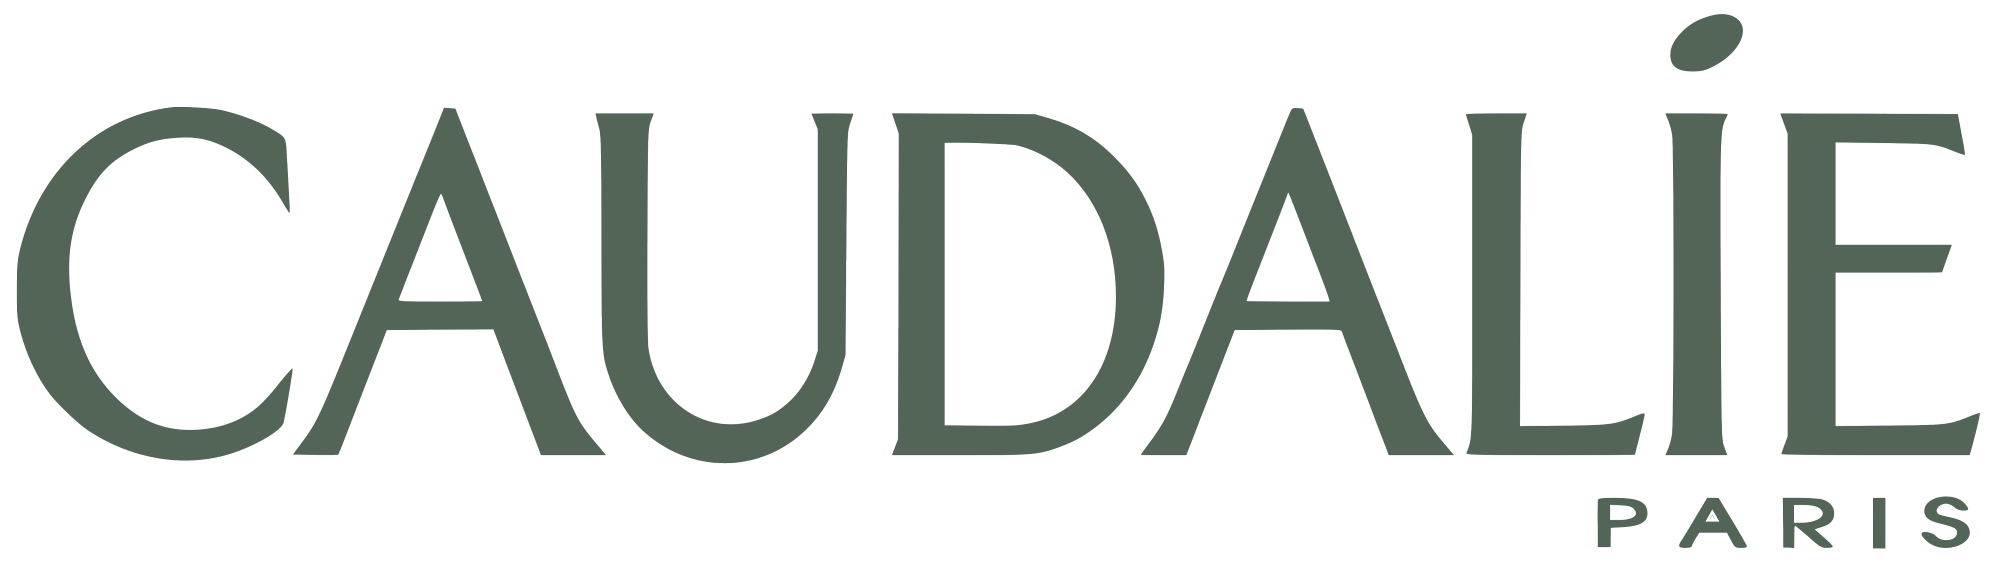 Caudalie logo, logotype